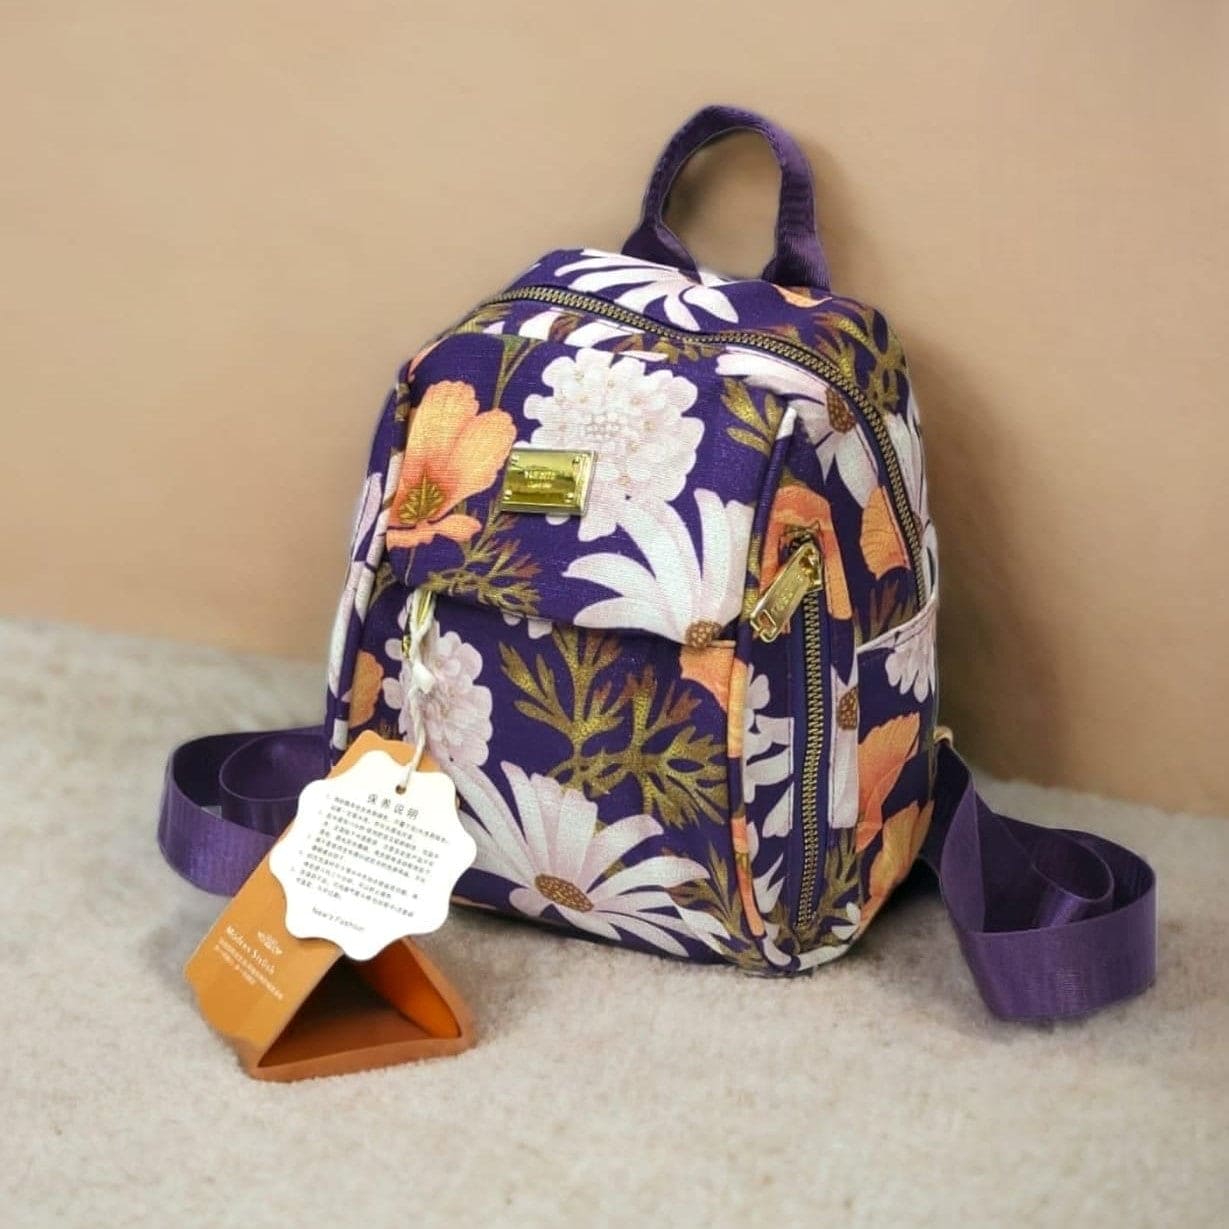 Blossom Style University Bag Pack For Girl, Large Capacity Outdoor Travel Backpack, Soft Toddler Bag